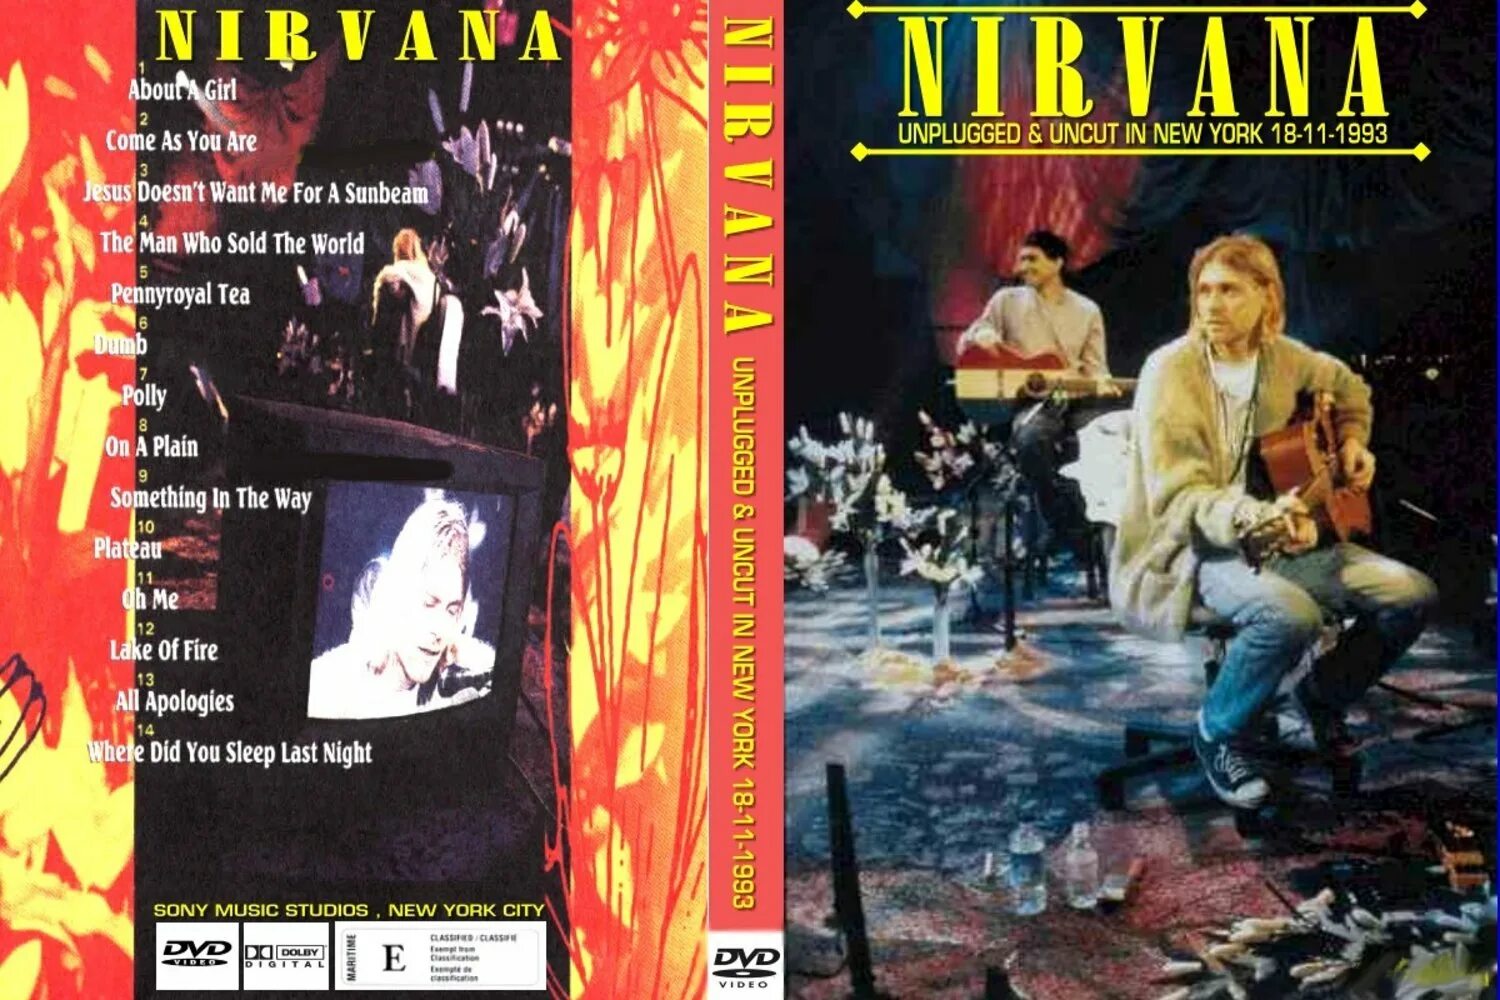 Nirvana unplugged in new. MTV Unplugged Nirvana 1994. Nirvana MTV Unplugged in New York 1994. DVD Nirvana - Unplugged in New York. Nirvana MTV Unplugged in New York обложка.